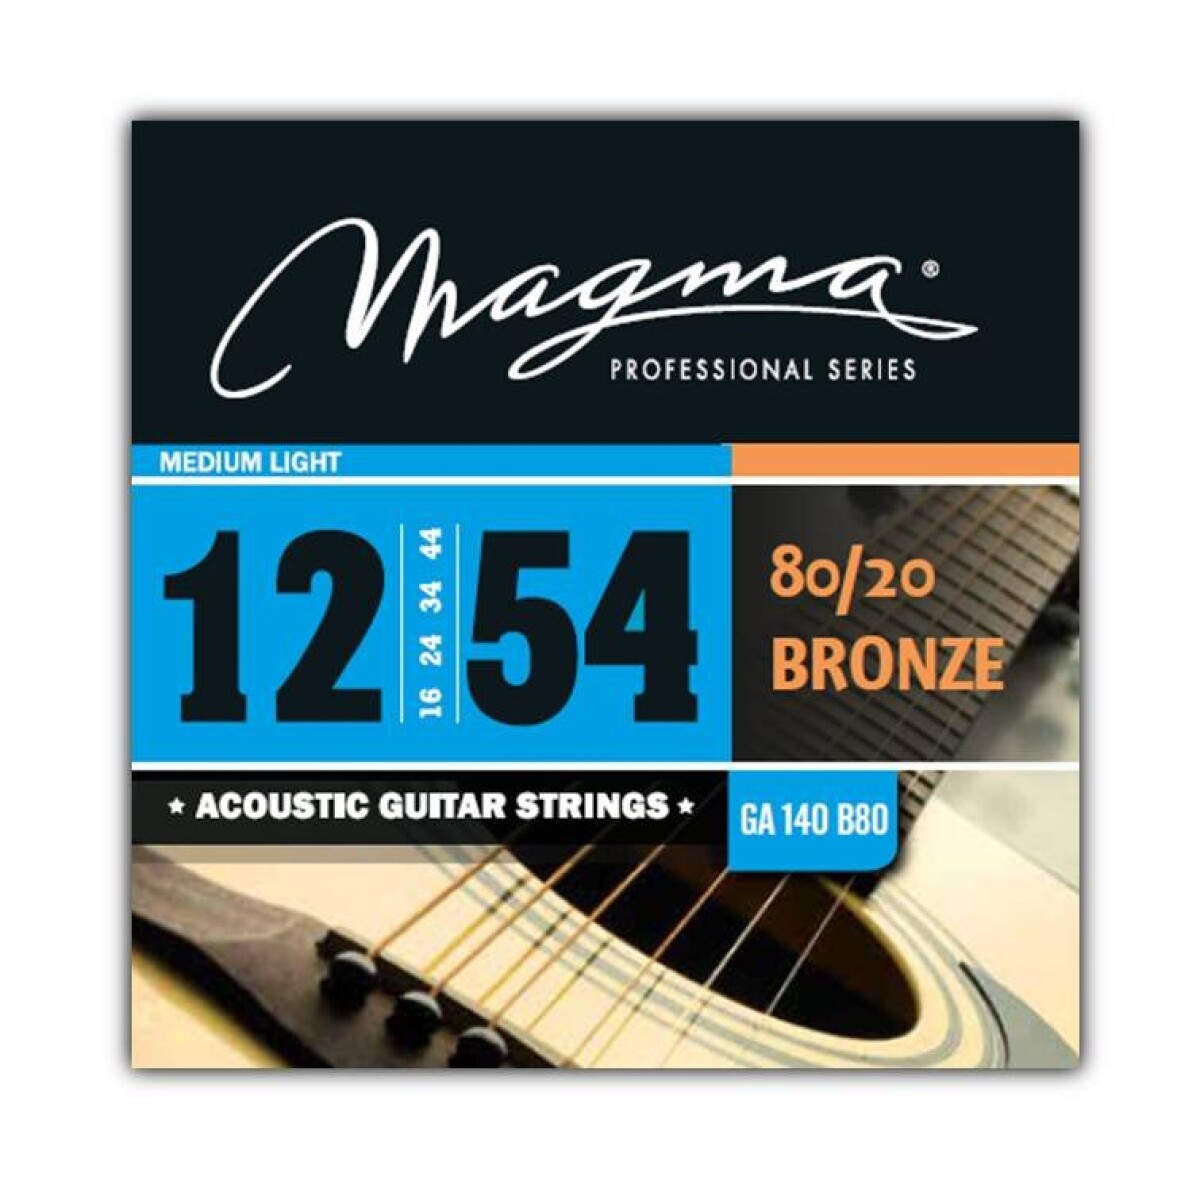 Encordado Guitarra Acustica Magma Bronce 80/20 .012 GA140B80 